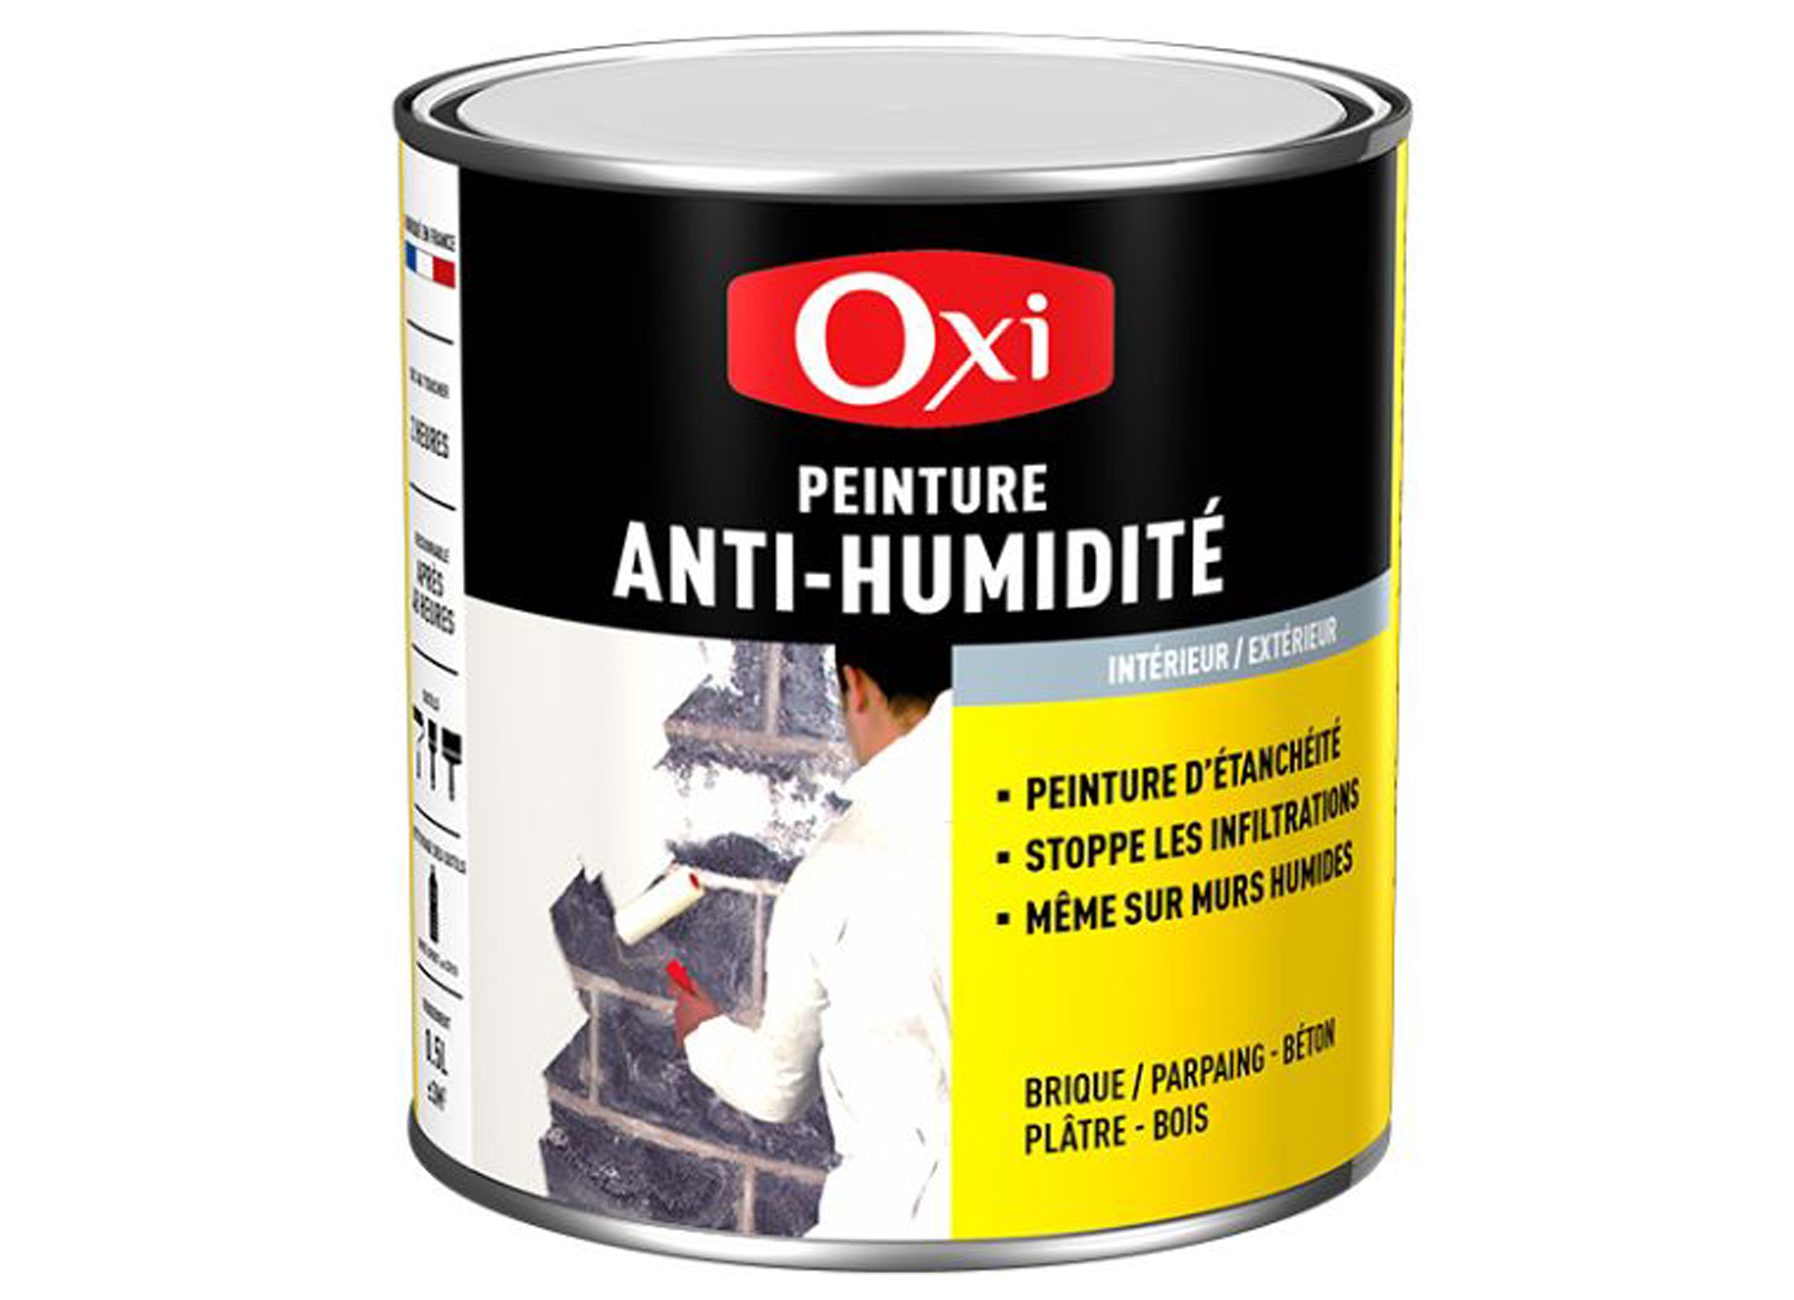 OXI PEINTURE ANTI-HUMIDITE 2,5L